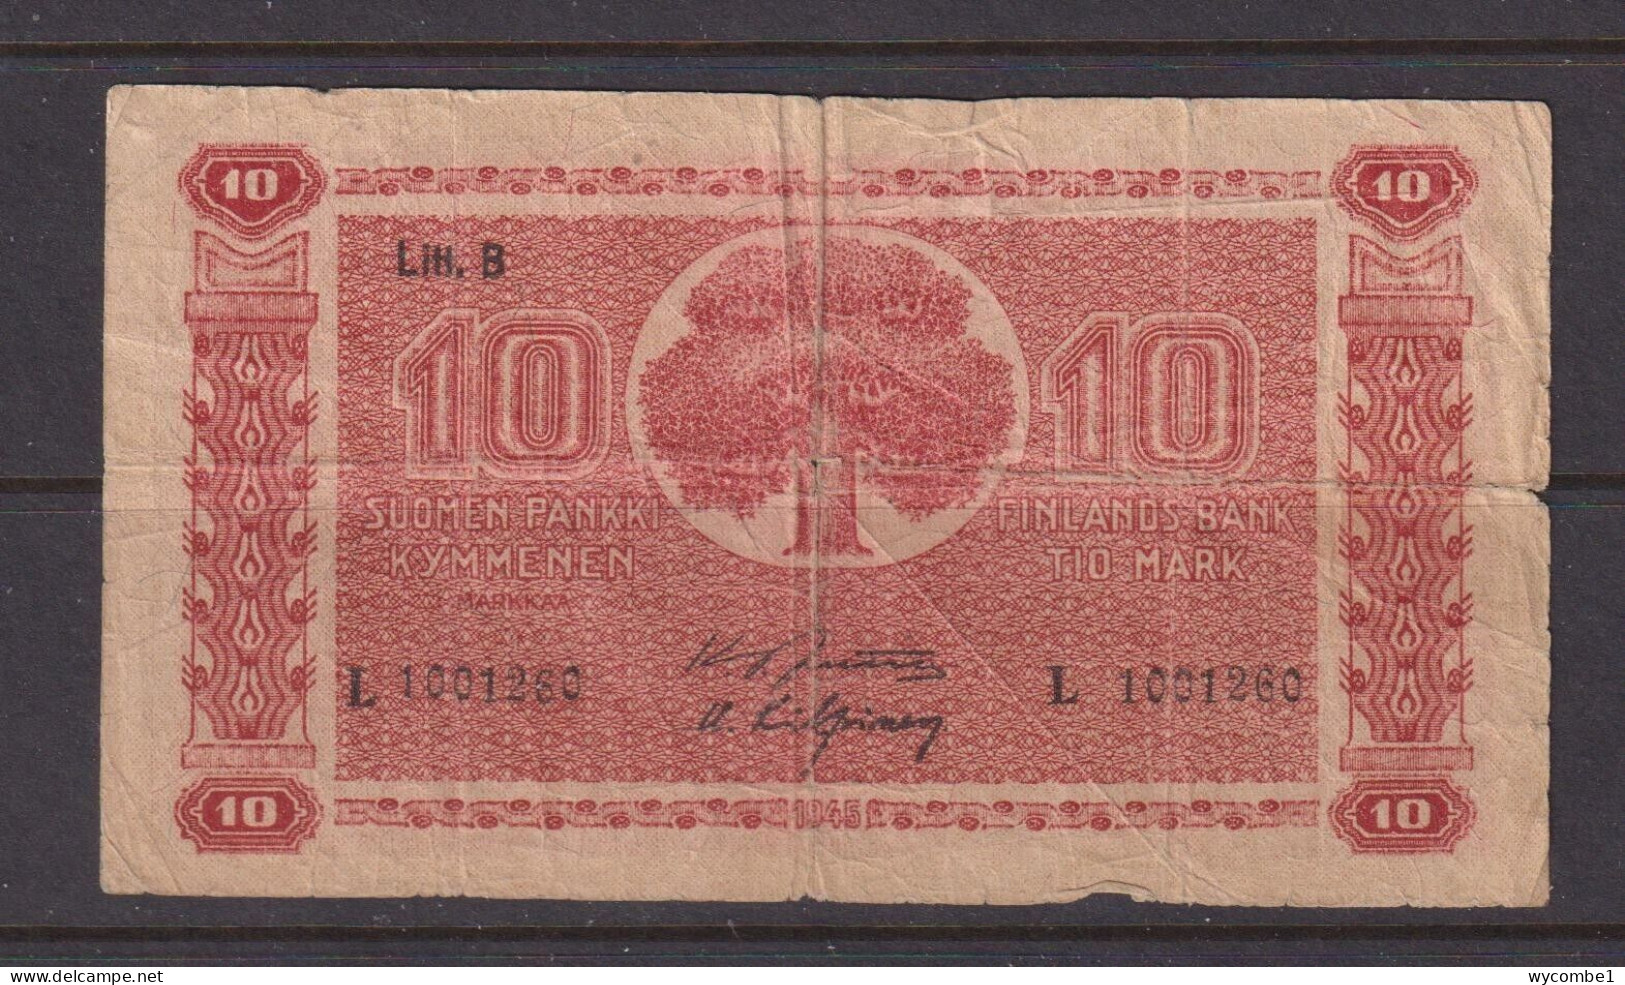 FINLAND - 1945 10 Markka Circulated Banknote - Finland